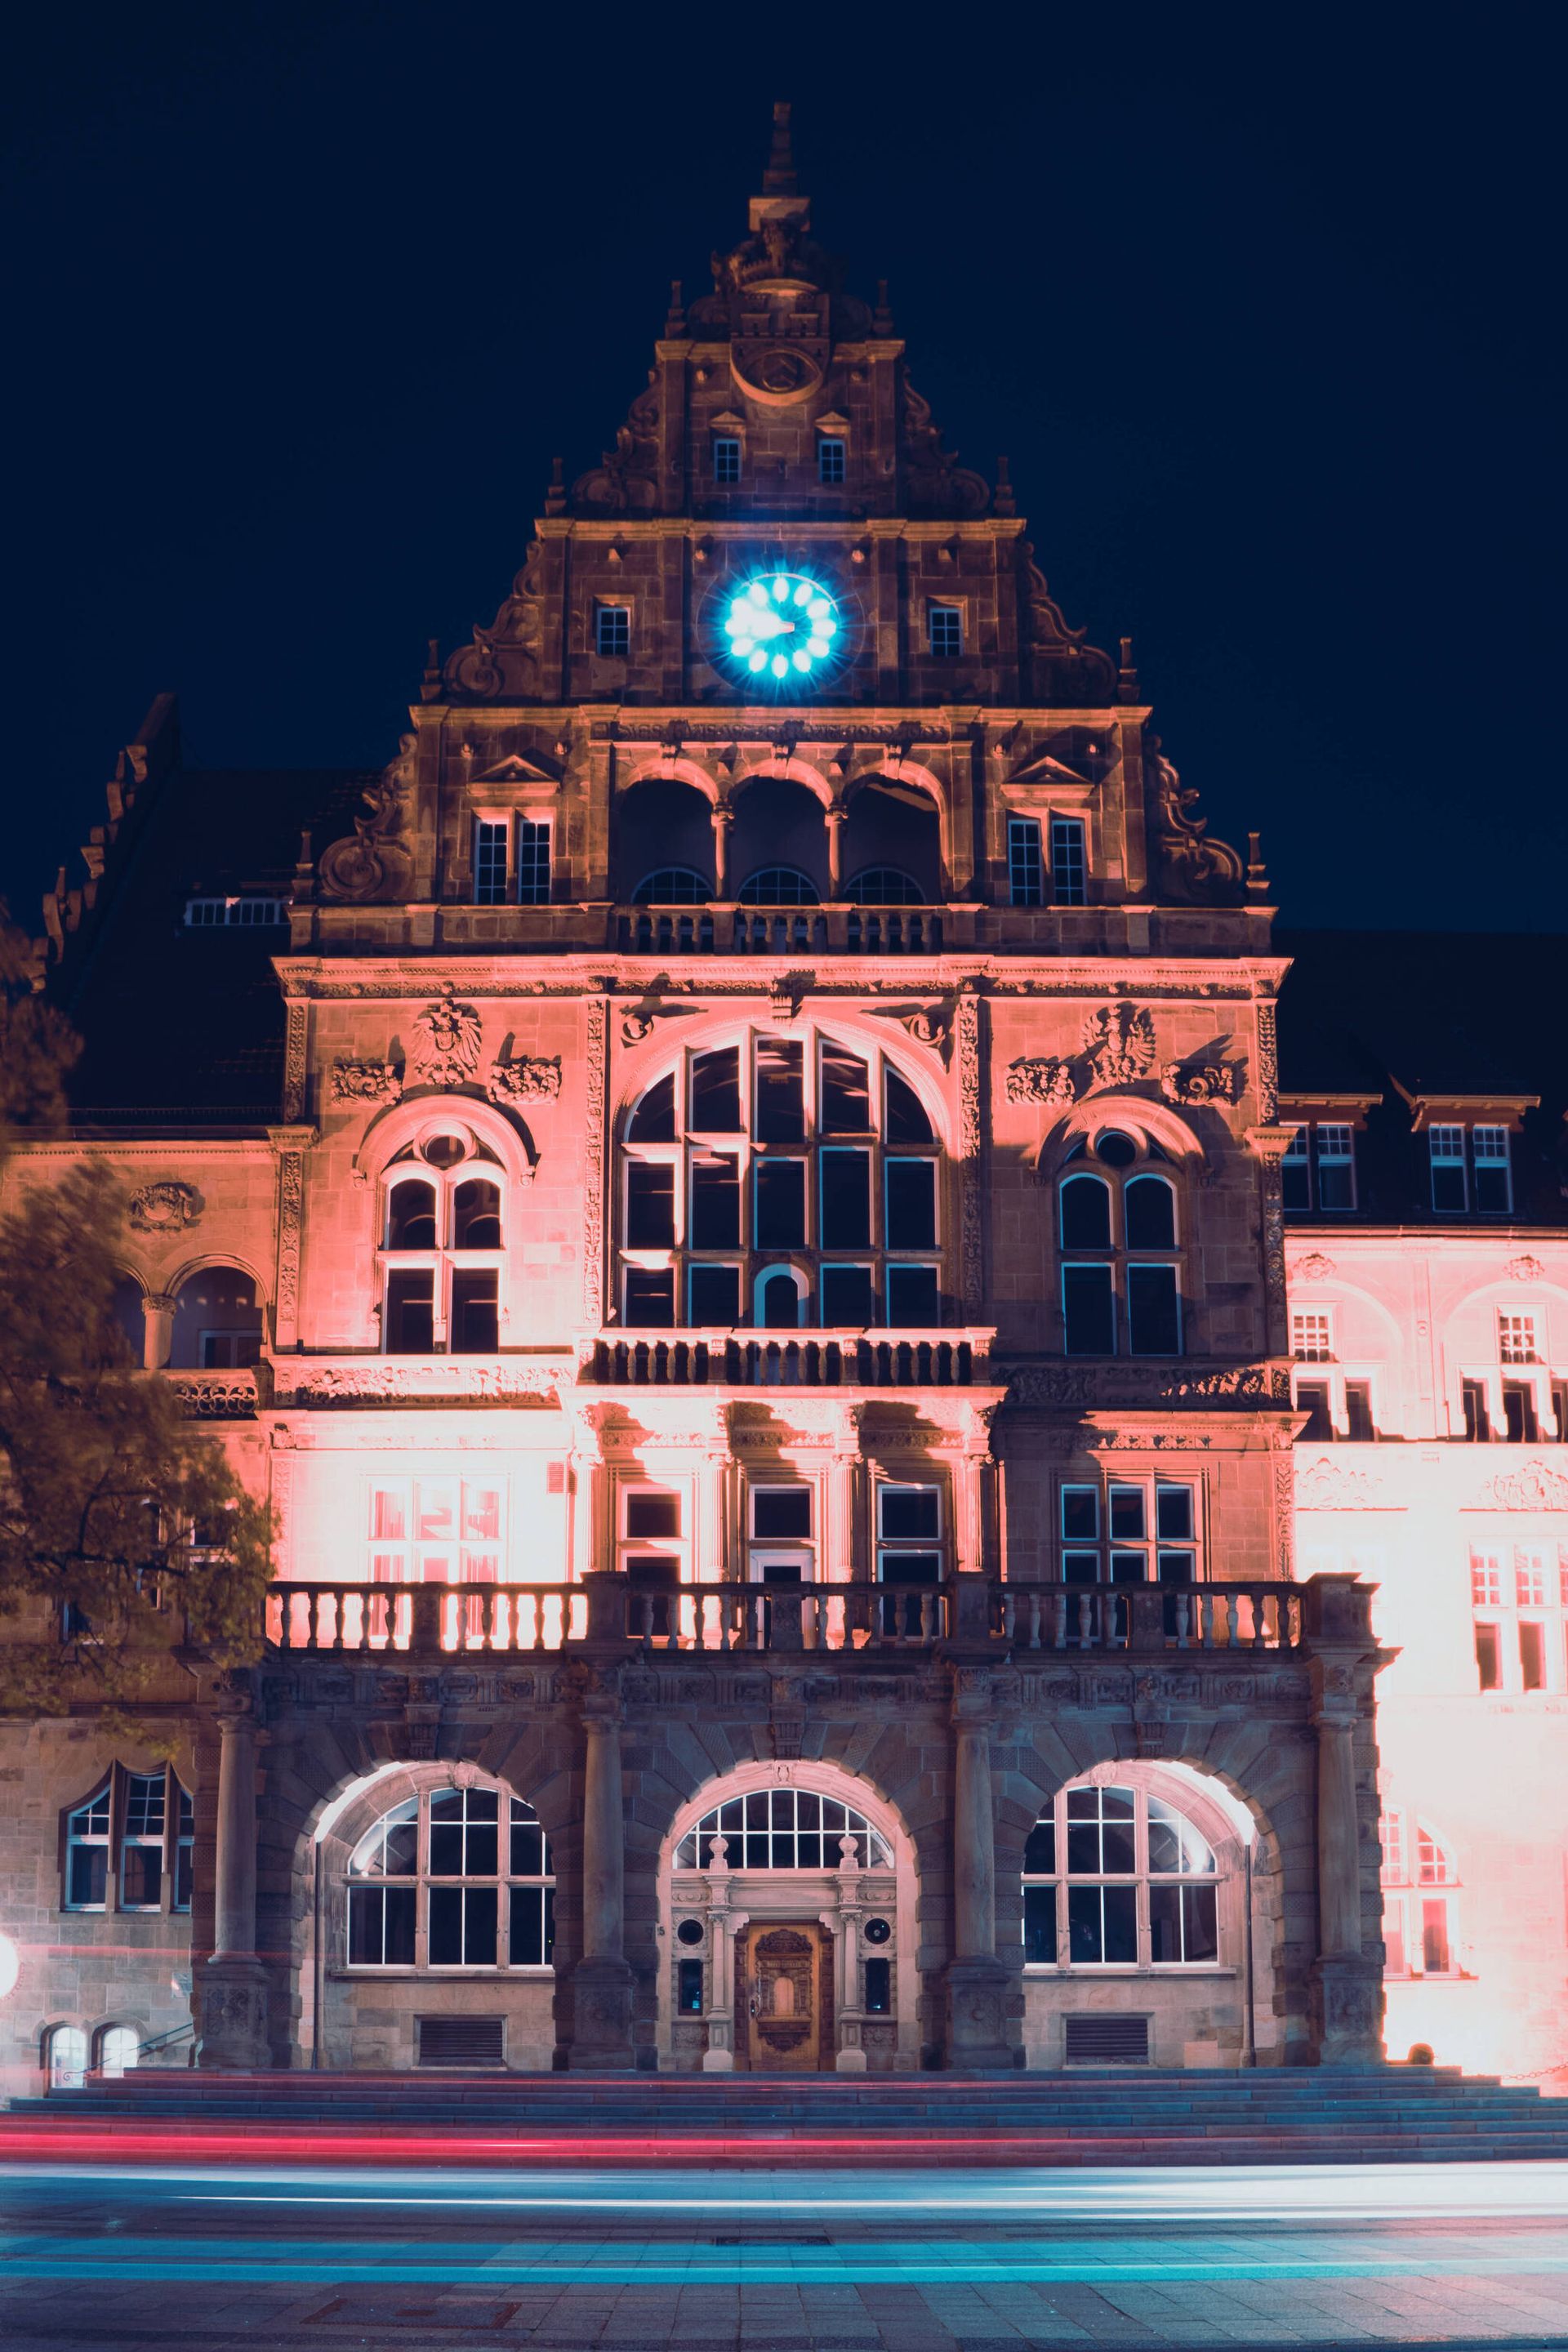 Nachtphotographie in Bielefeld. Bielefeld, 2021.